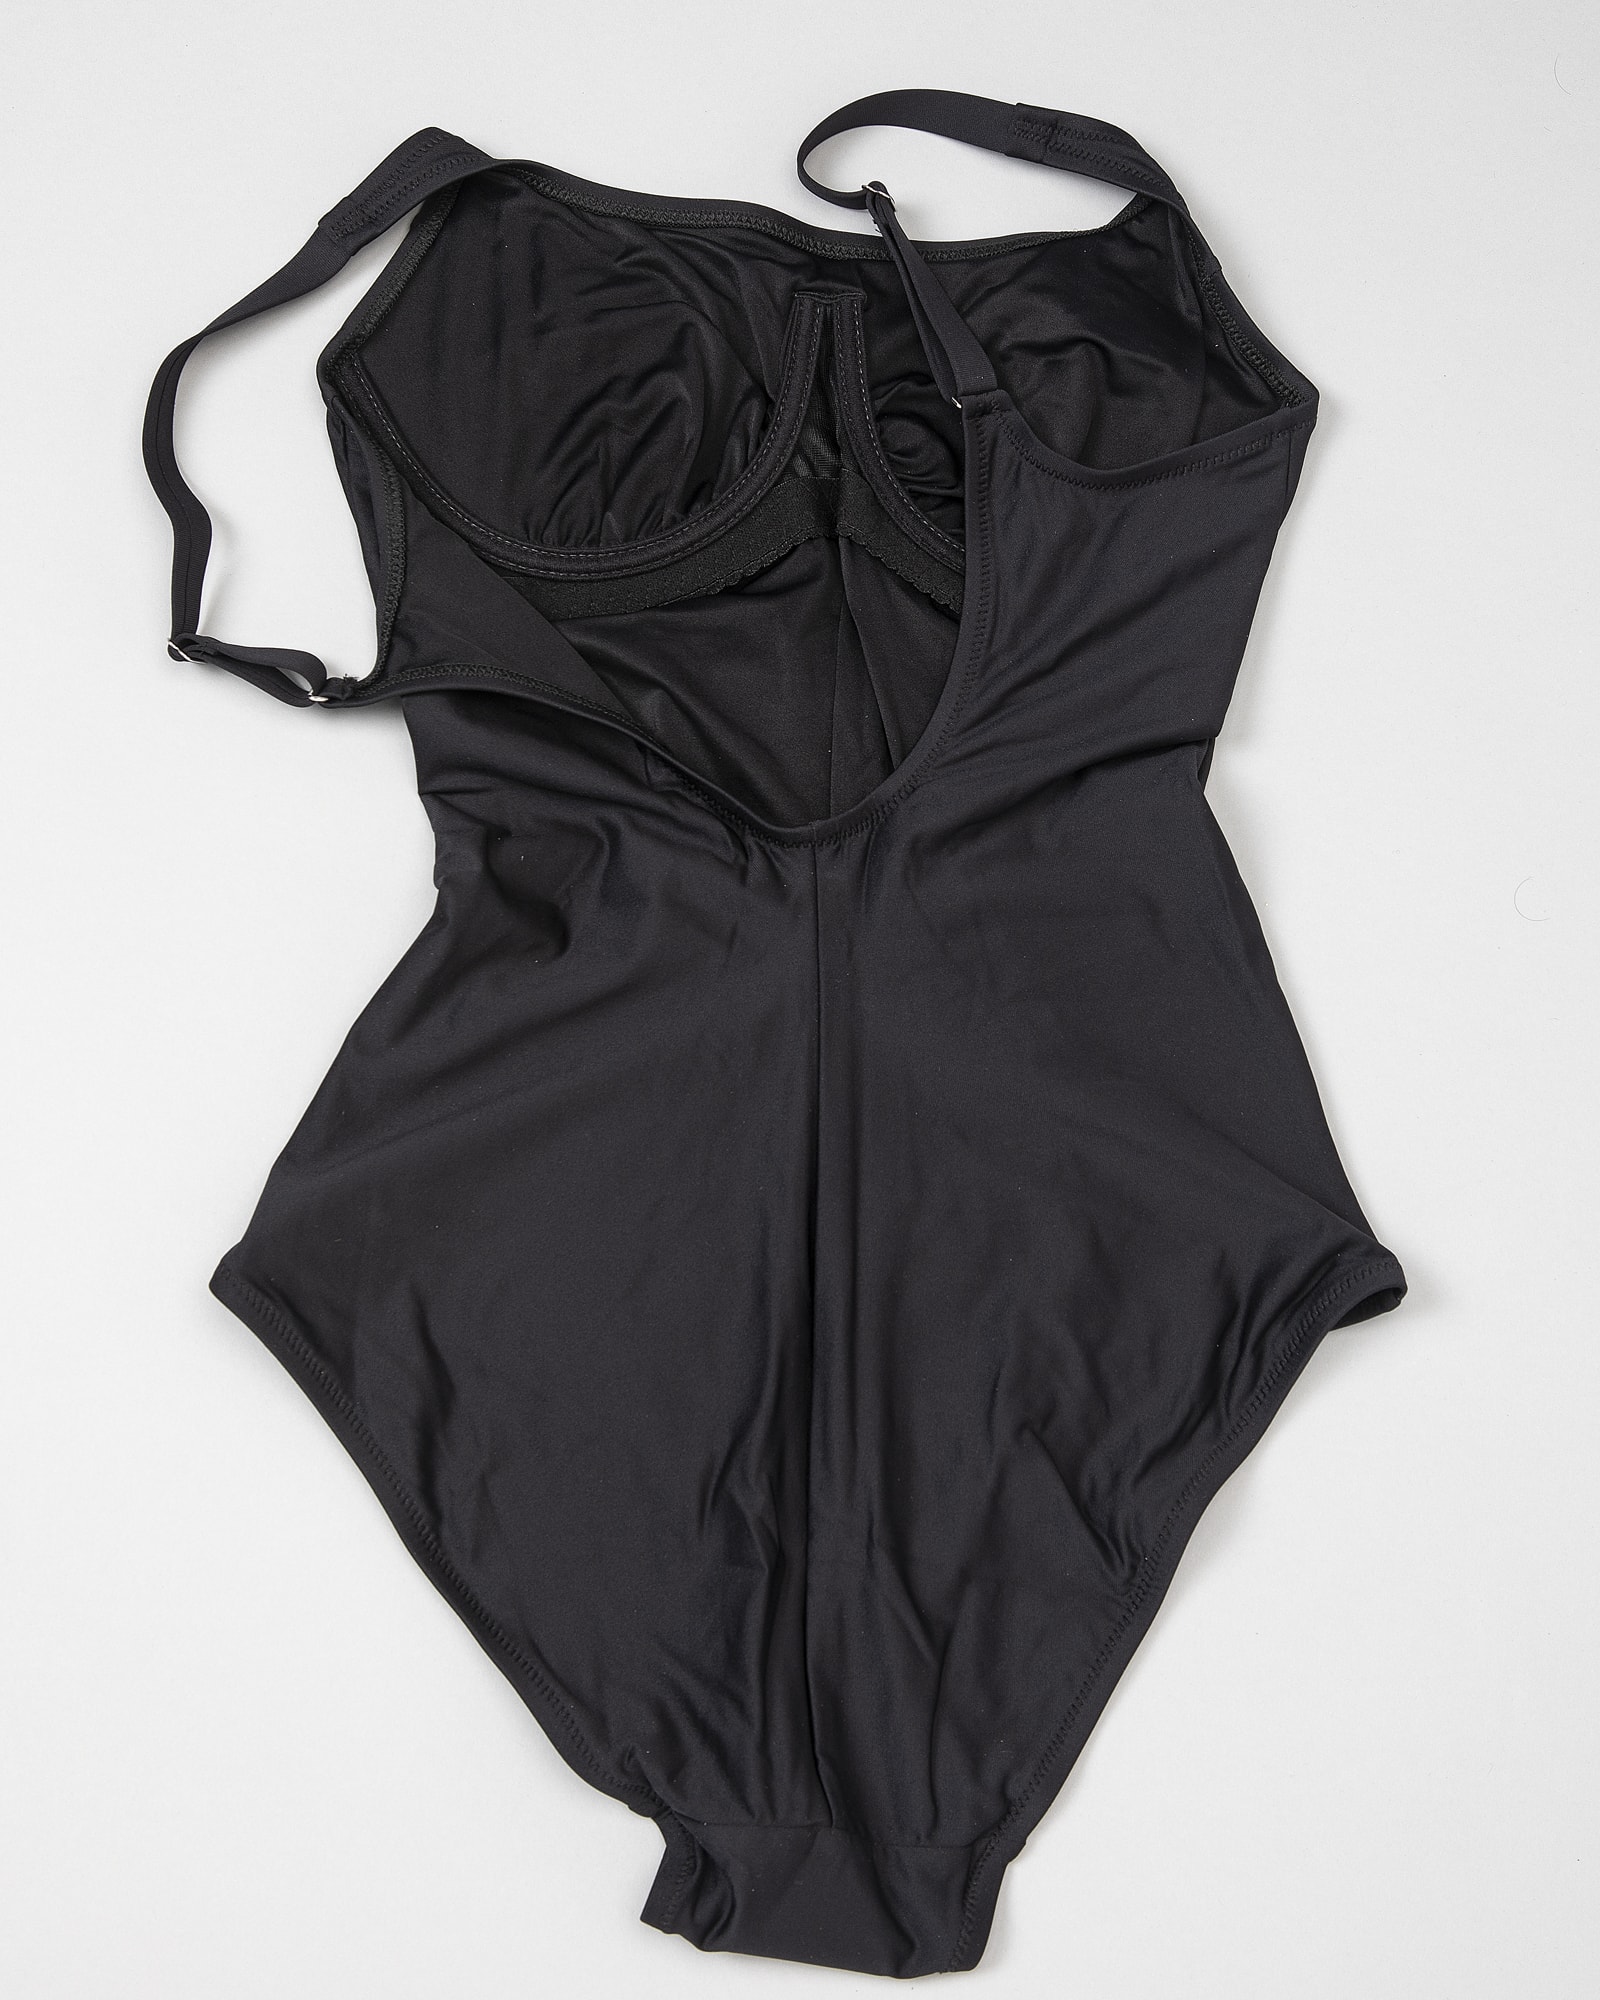 Antigel L'estivale Chic Swimsuit - Black fba6216-0005 b